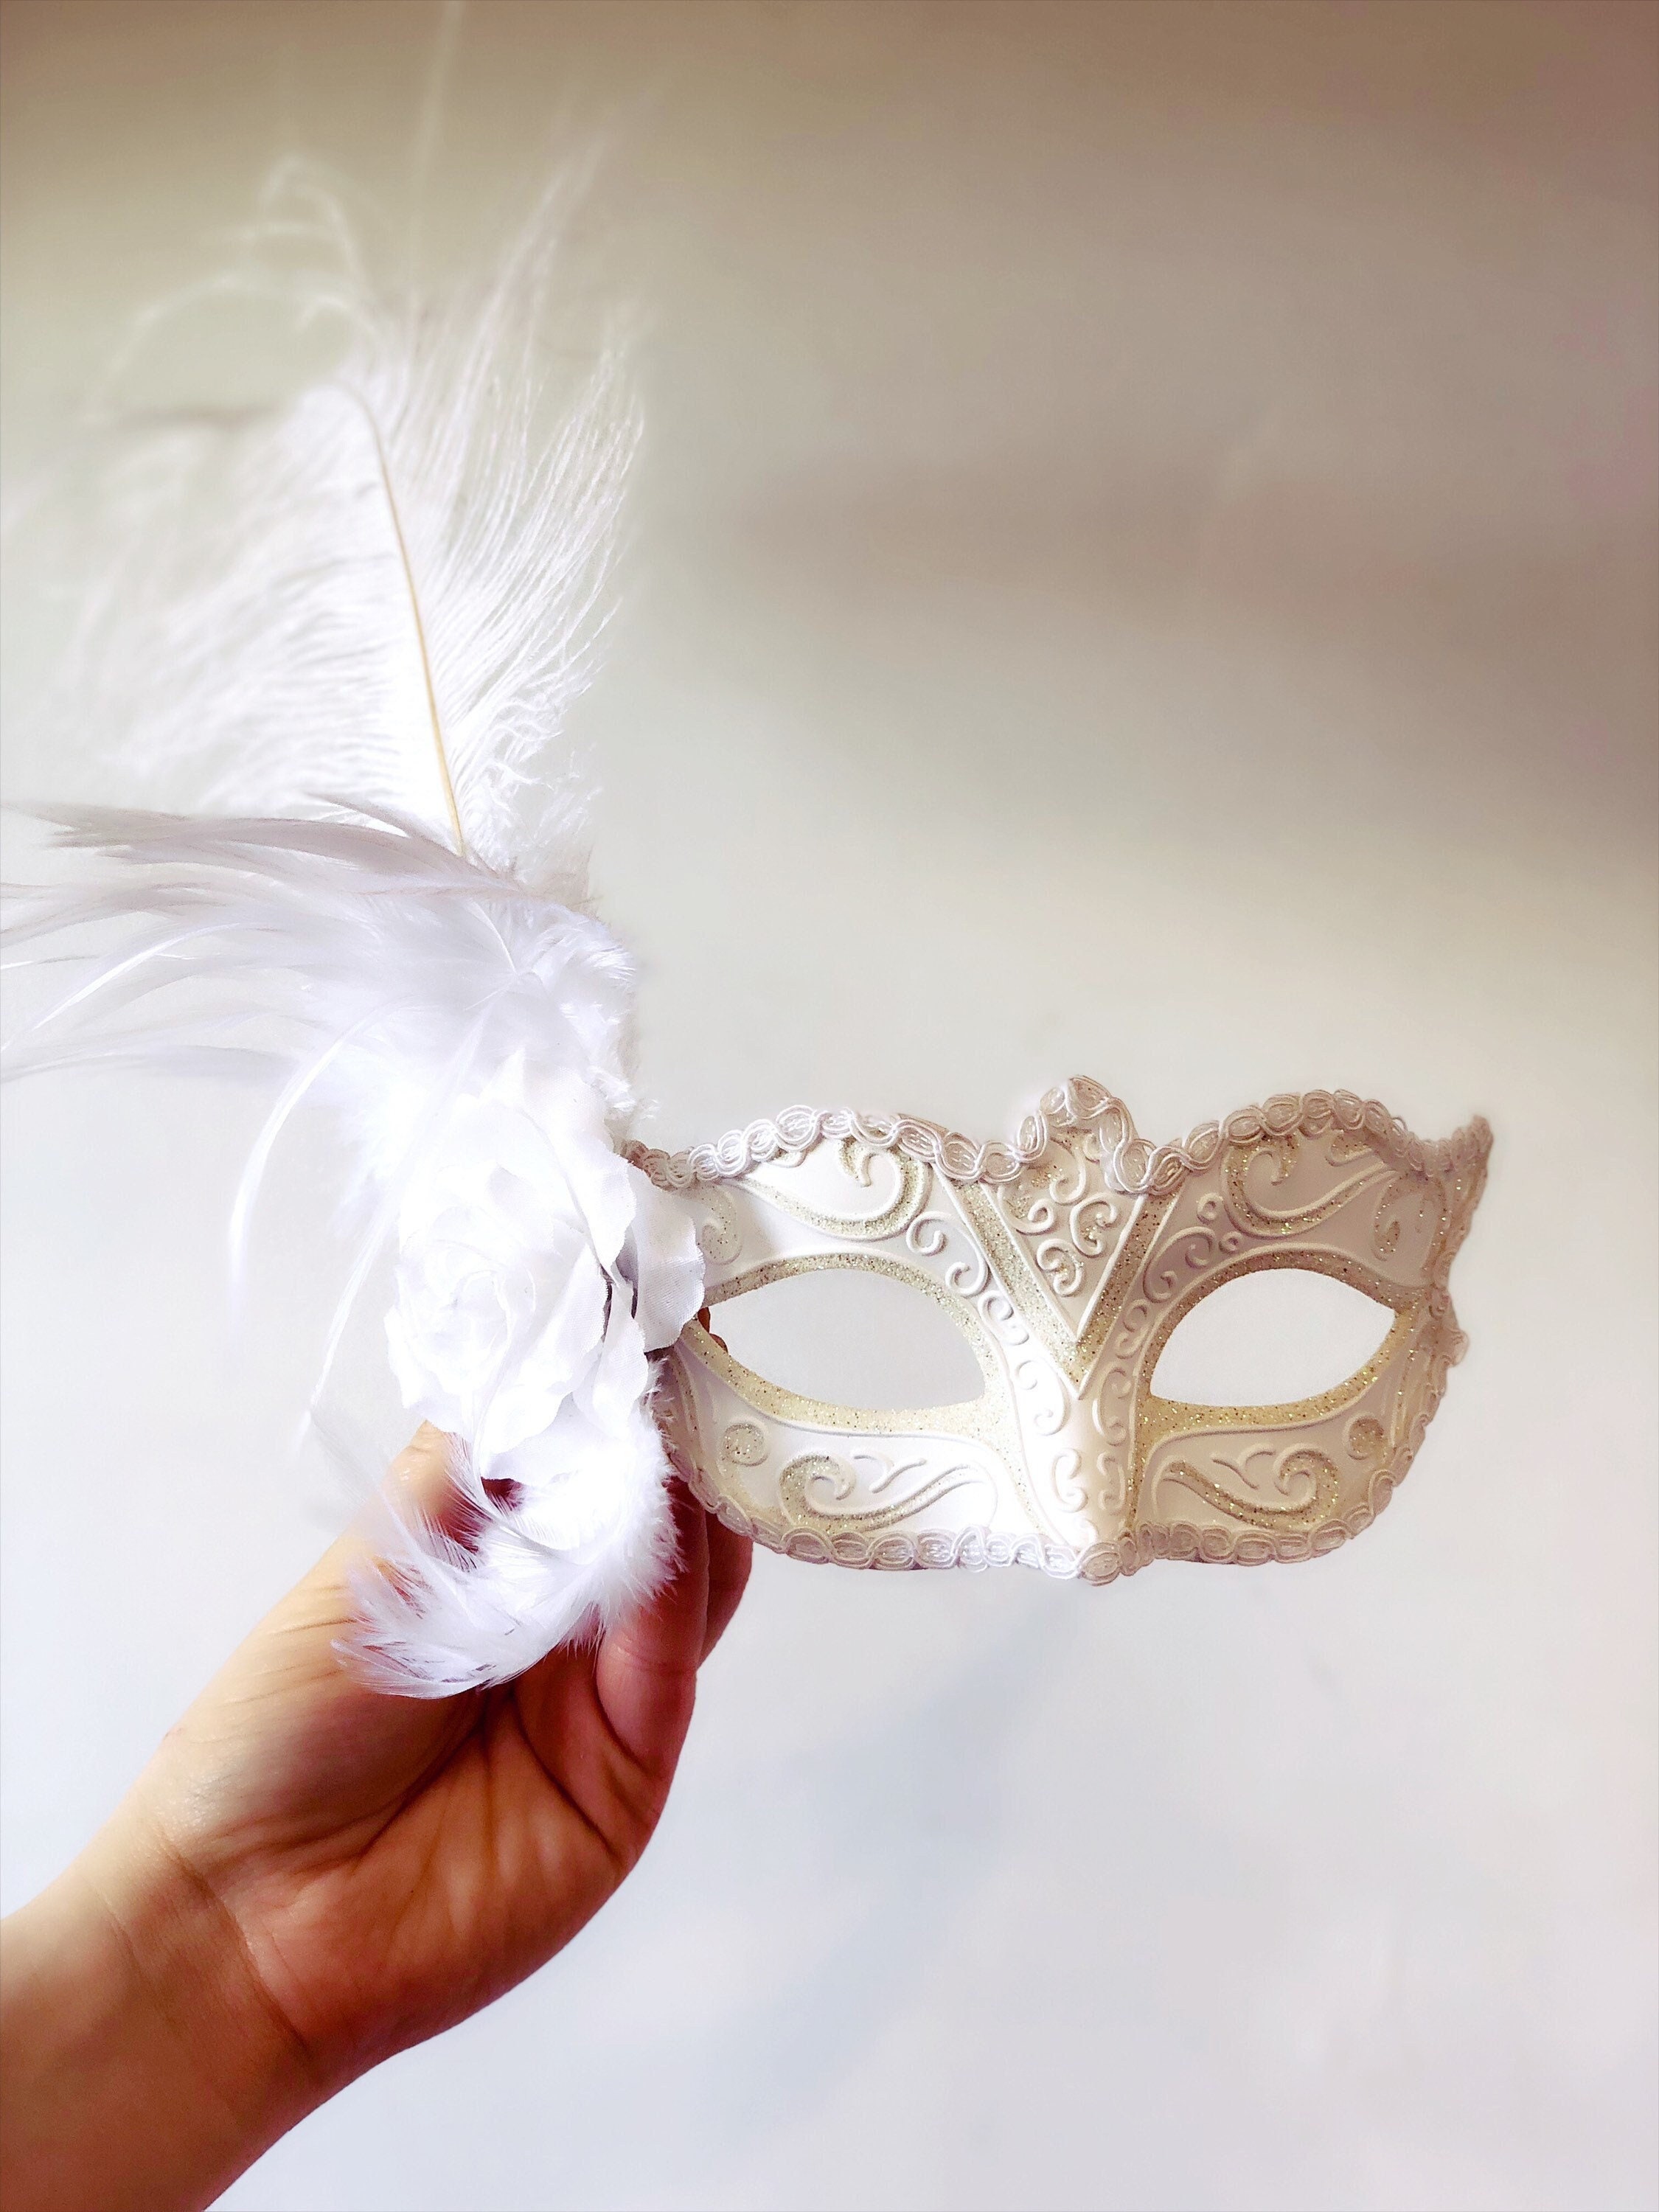 Blank DIY Masquerade Mask, White Mask, Halloween Mask, Costume Mask,  Halloween Costume, Masquerade Party, Masquerade Ball, Party Activities 